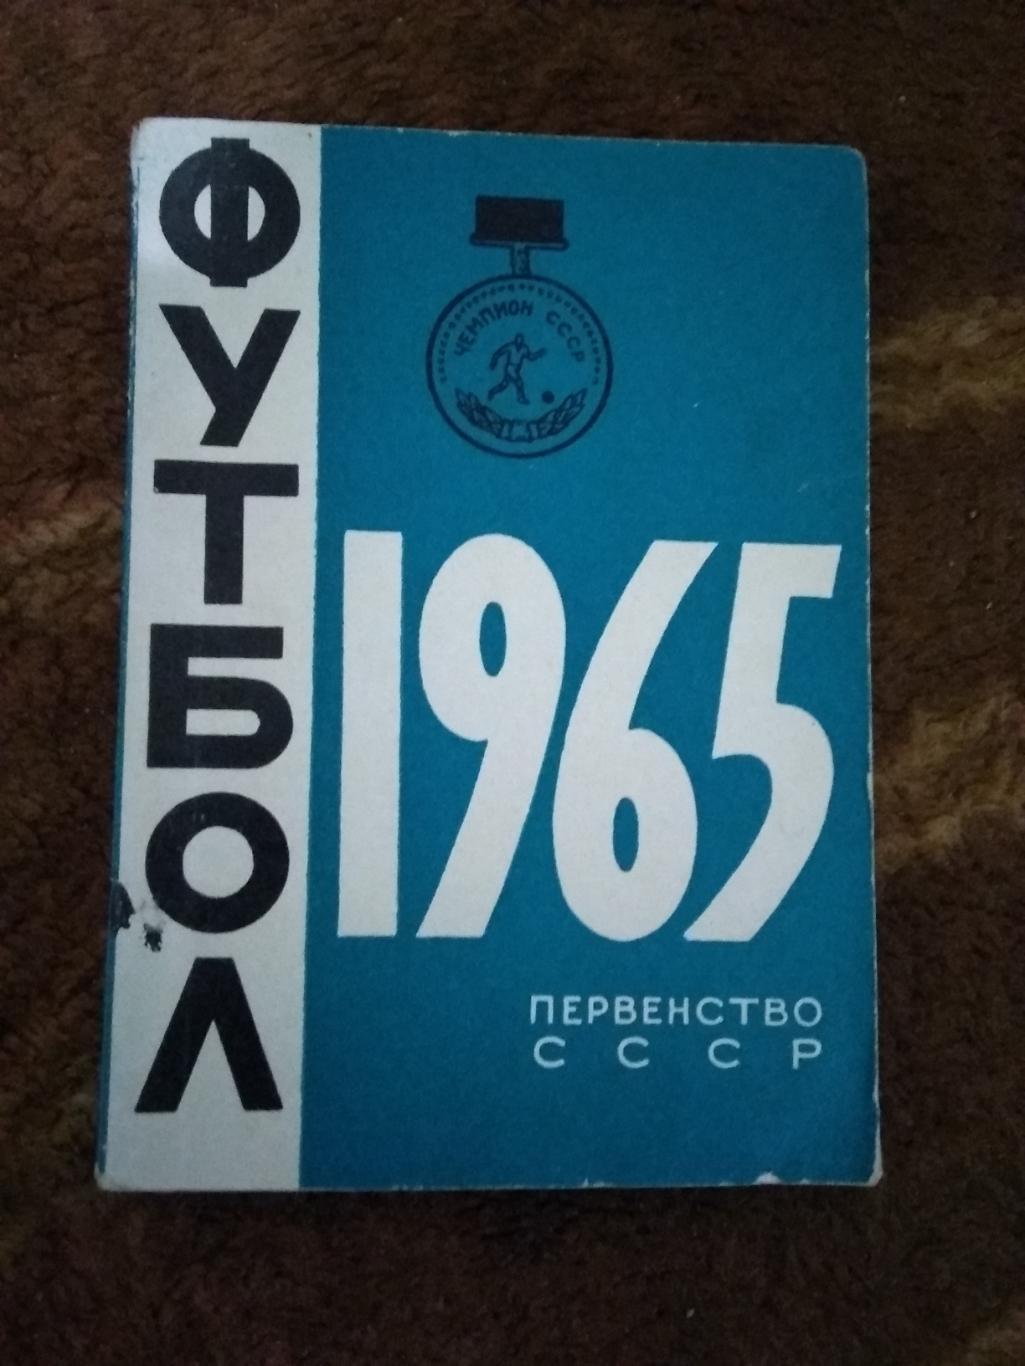 Футбол.Минск 1 круг 1965 г.